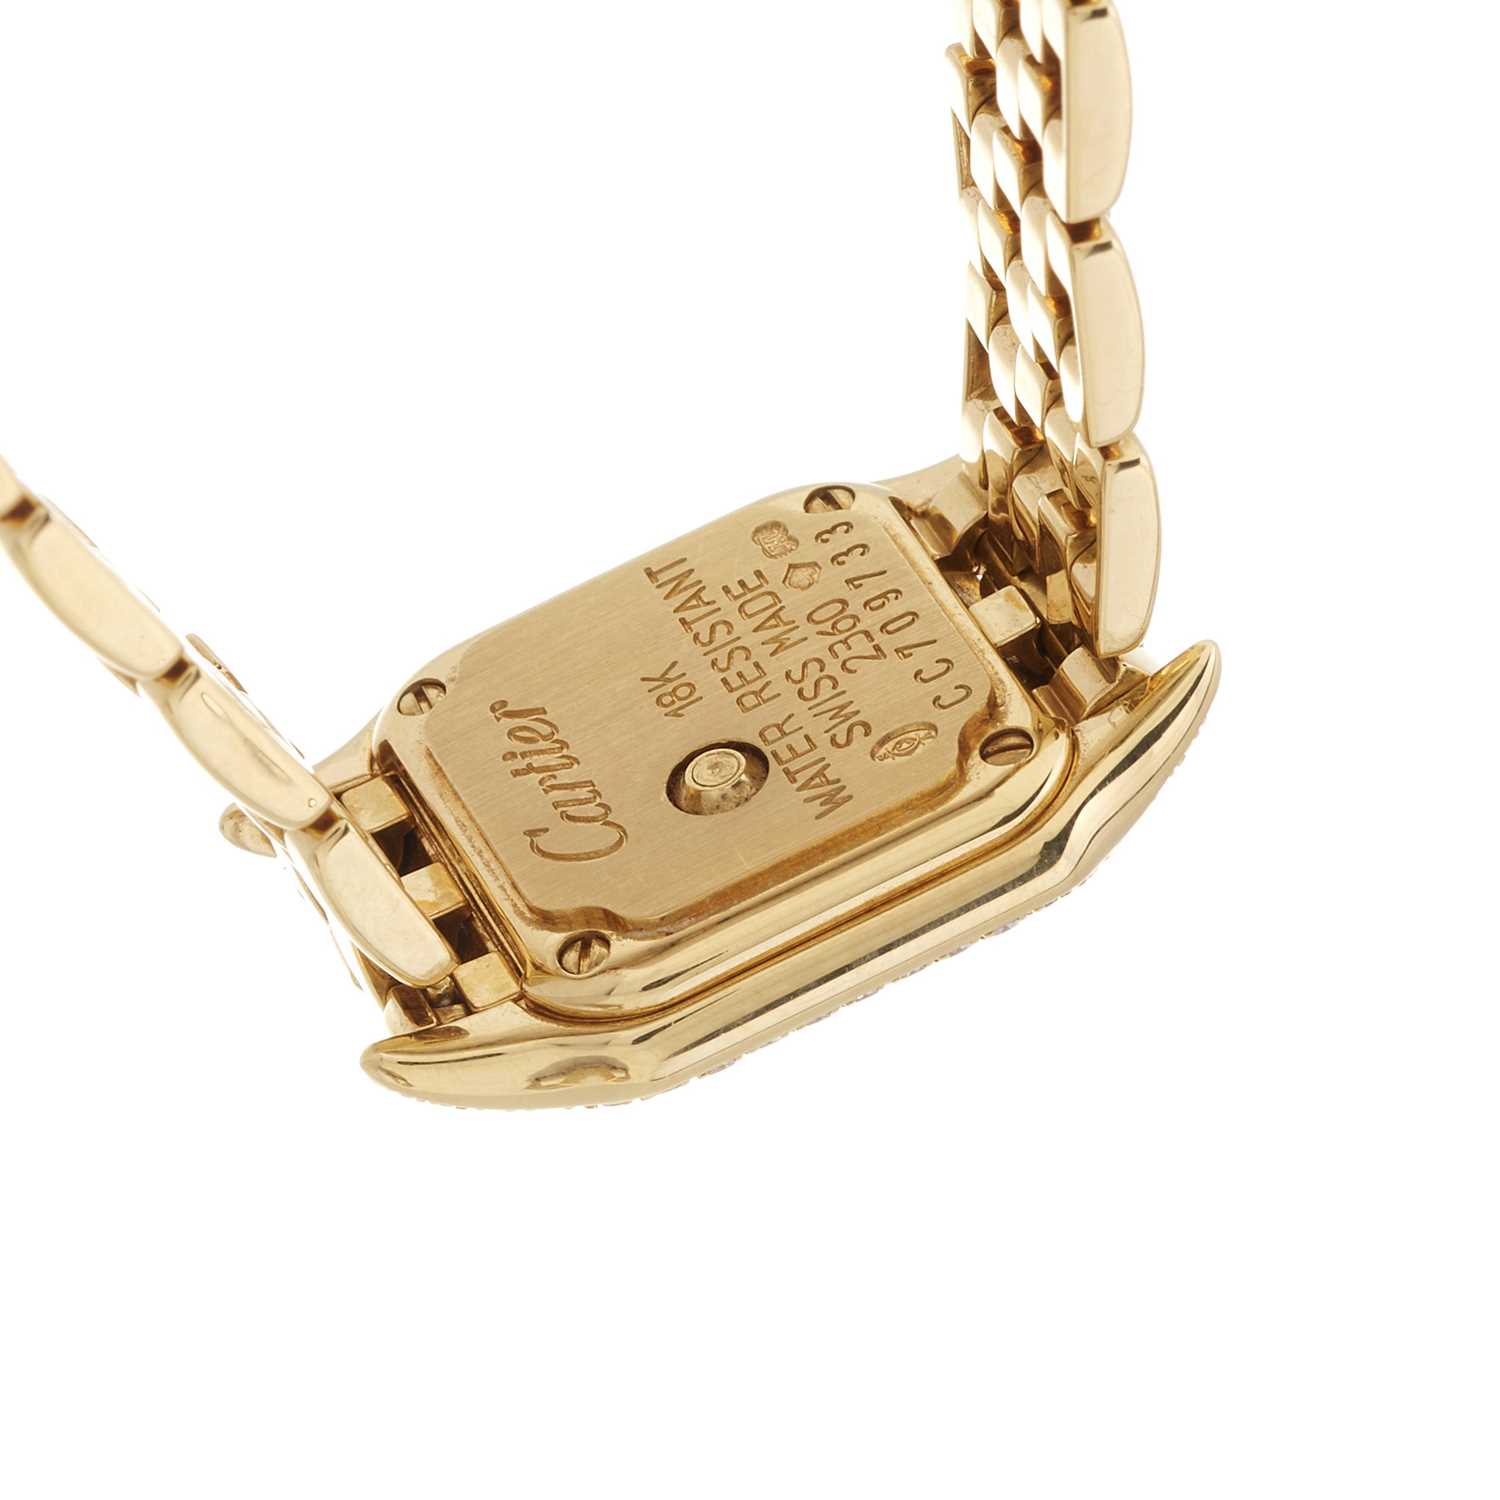 Cartier, an 18ct gold diamond Panthere Mini bracelet watch - Image 3 of 3